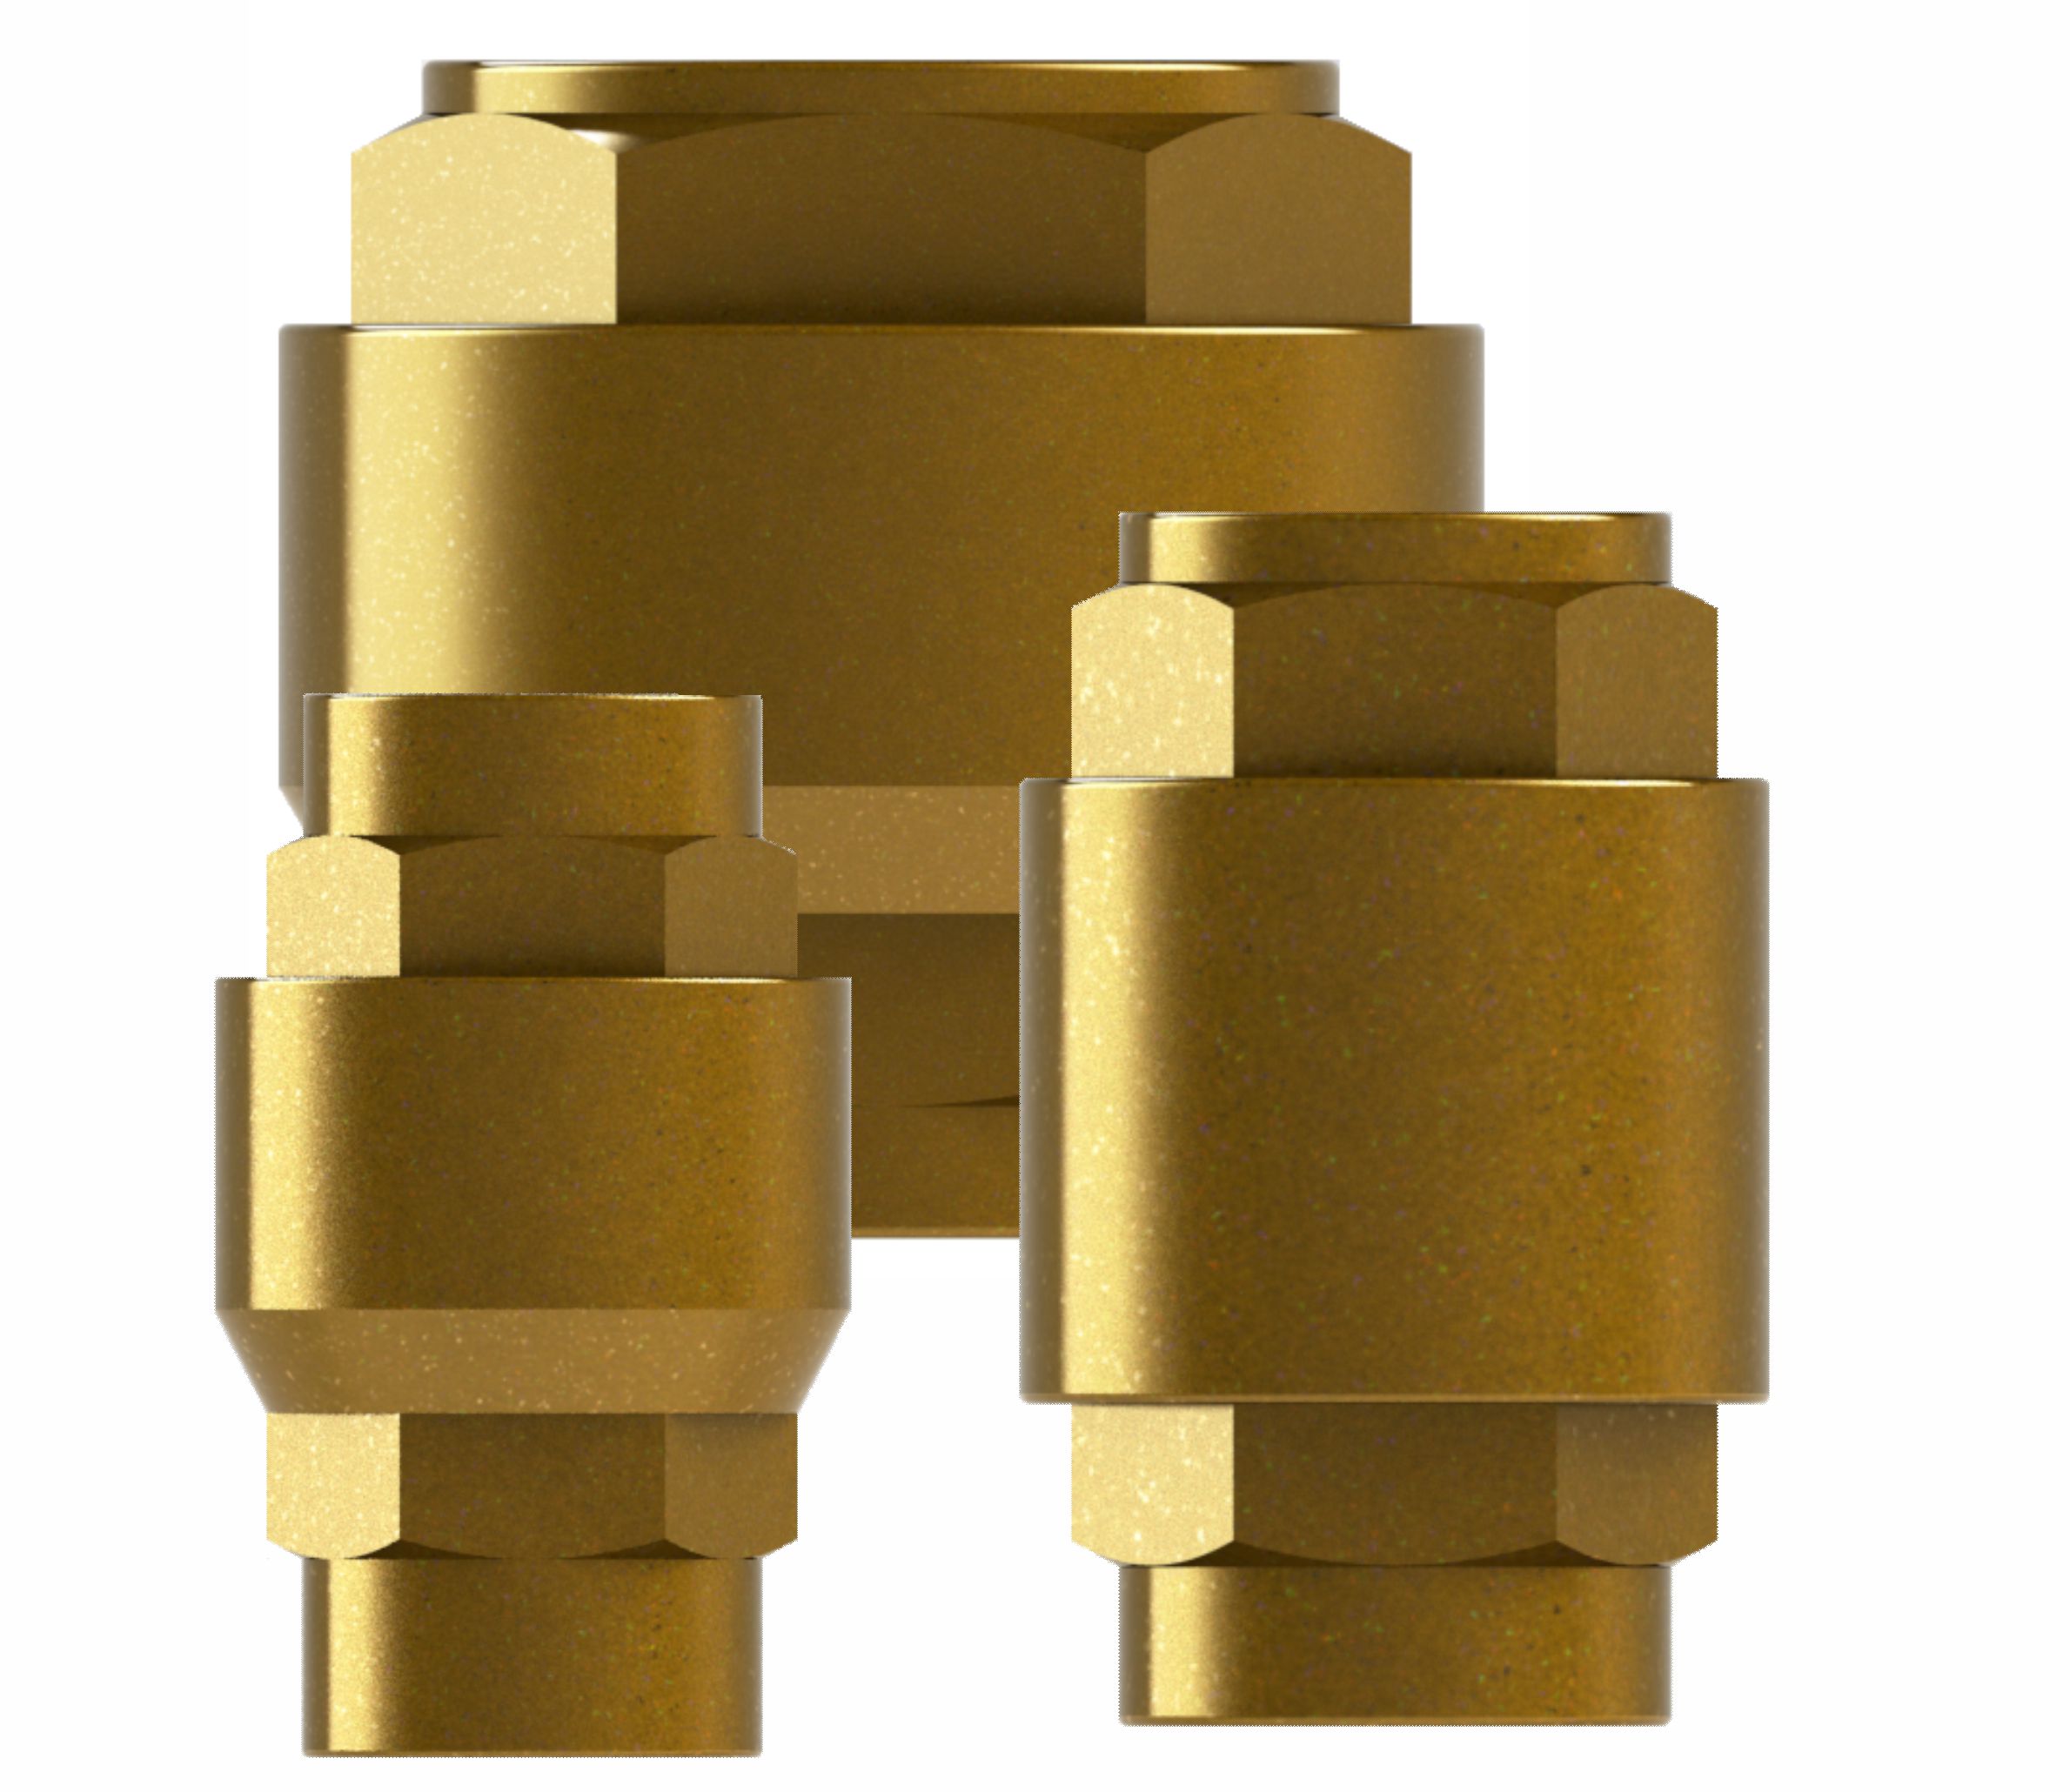 U600 series valves from valve check